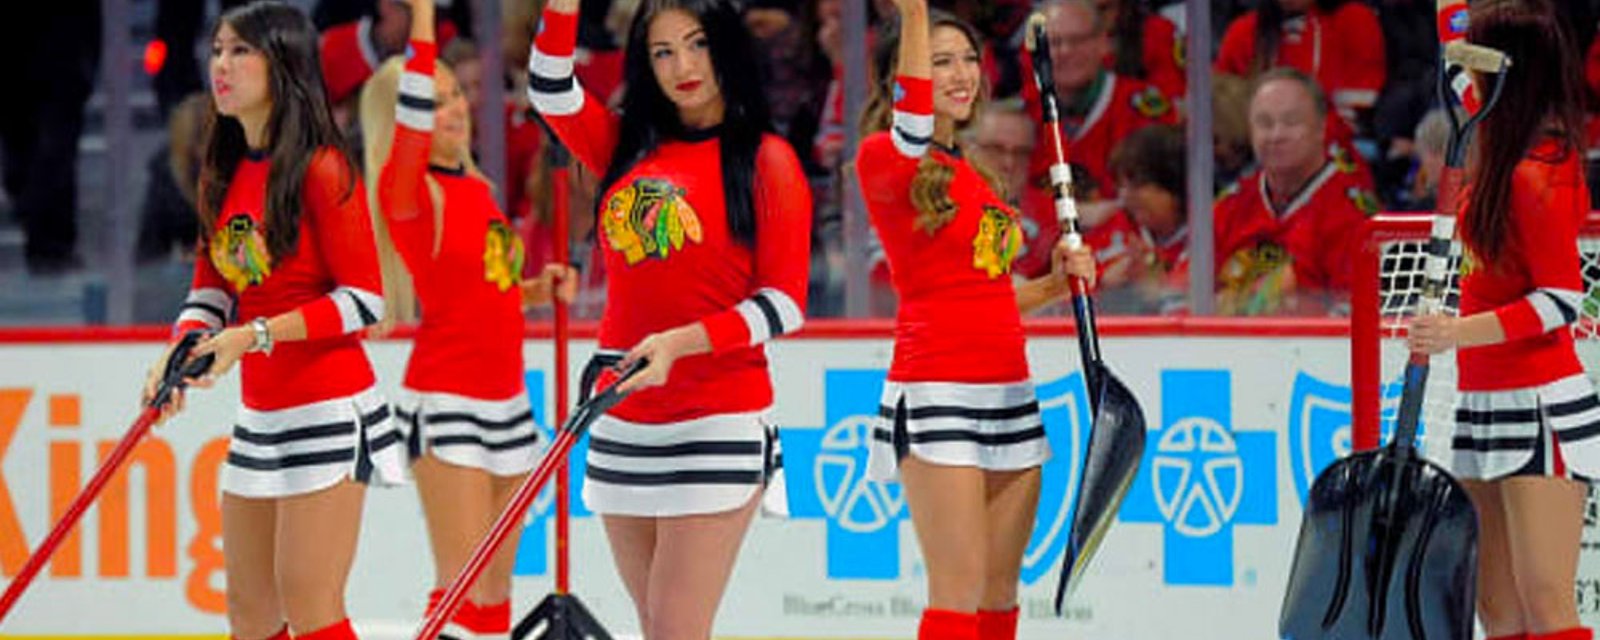 Report: The Blackhawks' Ice Girls crew is no more